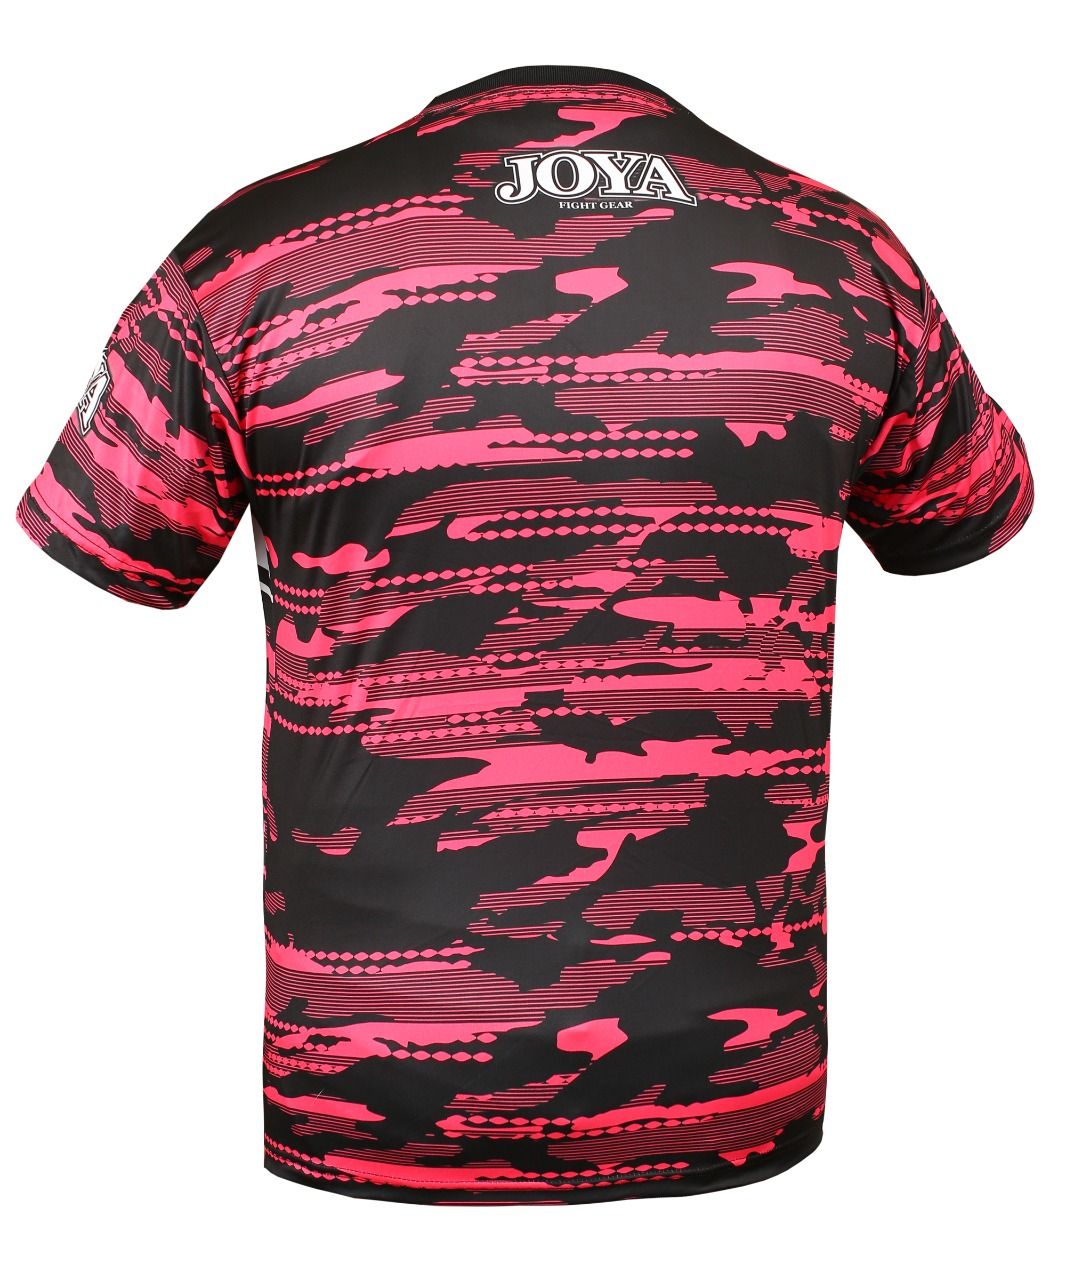 joya_camo_v2_t-shirt_-_pink_2.jpg